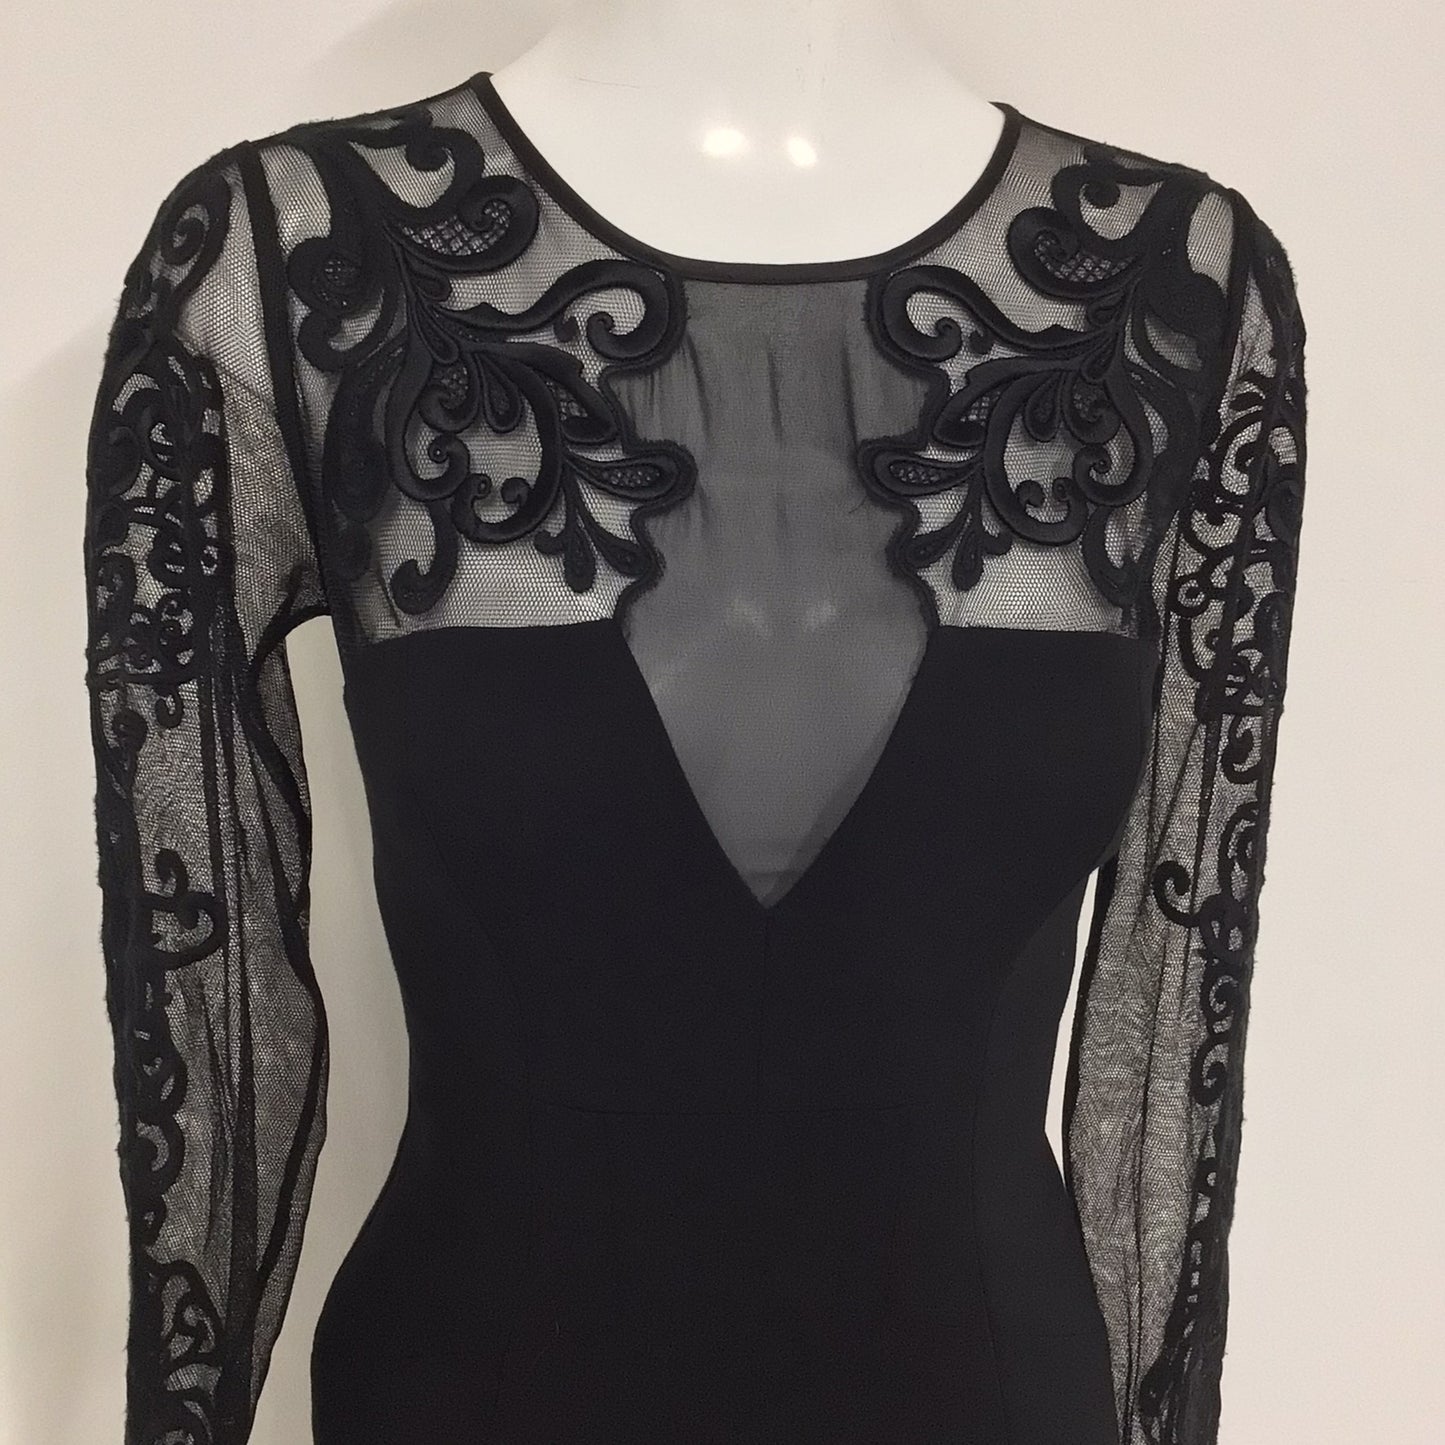 Karen Millen Black Embroidered Sleeve Dress Size 10 (approx)